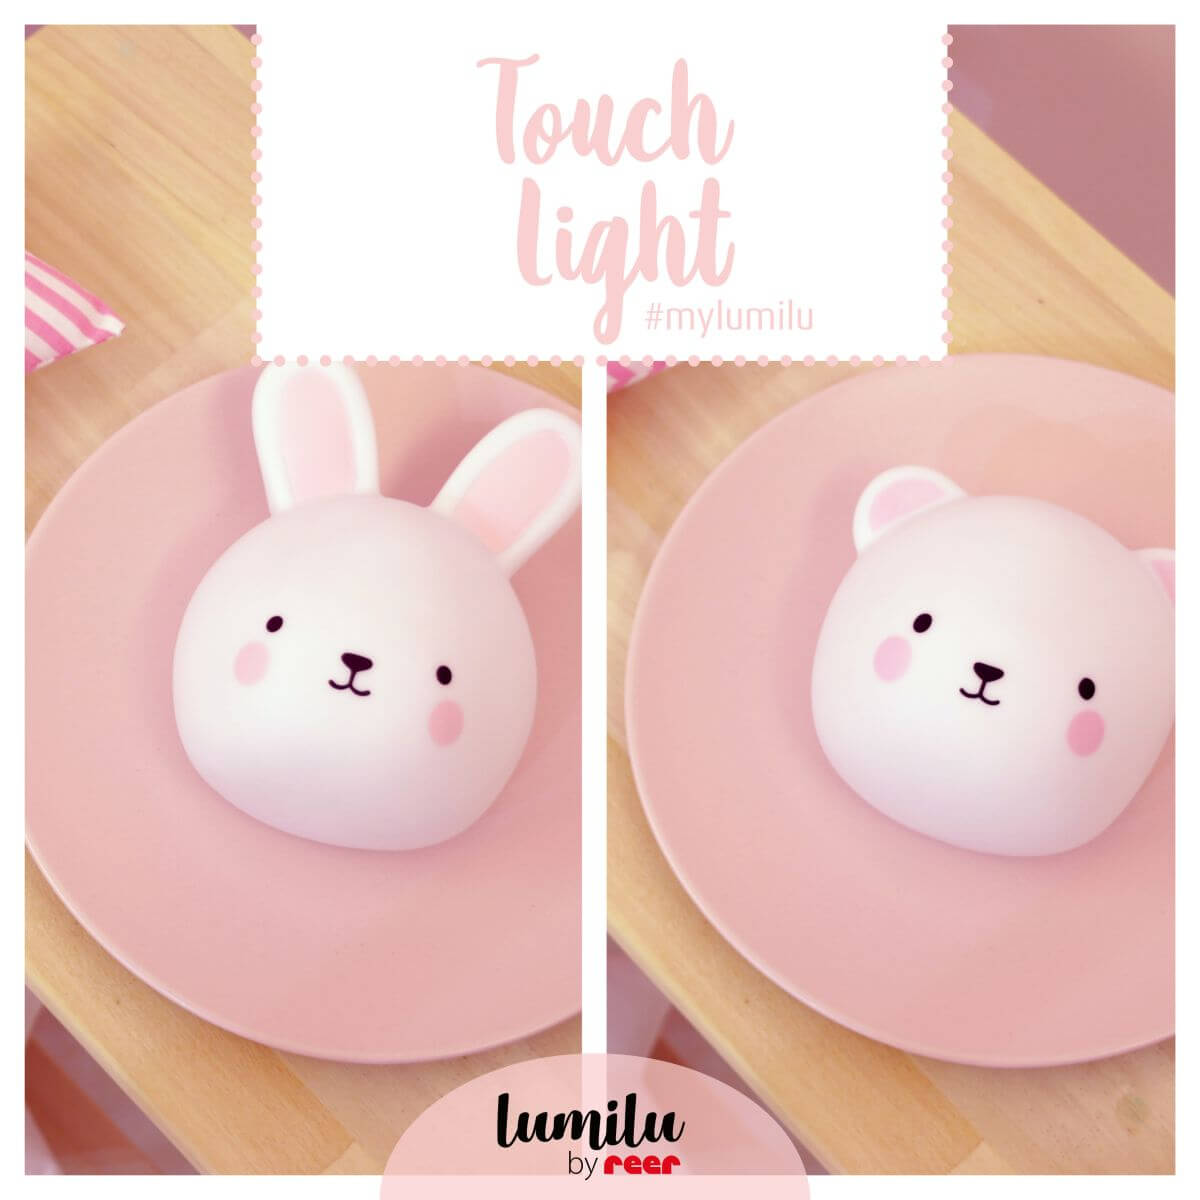 Bear - Touch Light lumilu Nachtlicht - geprüfte B-Ware